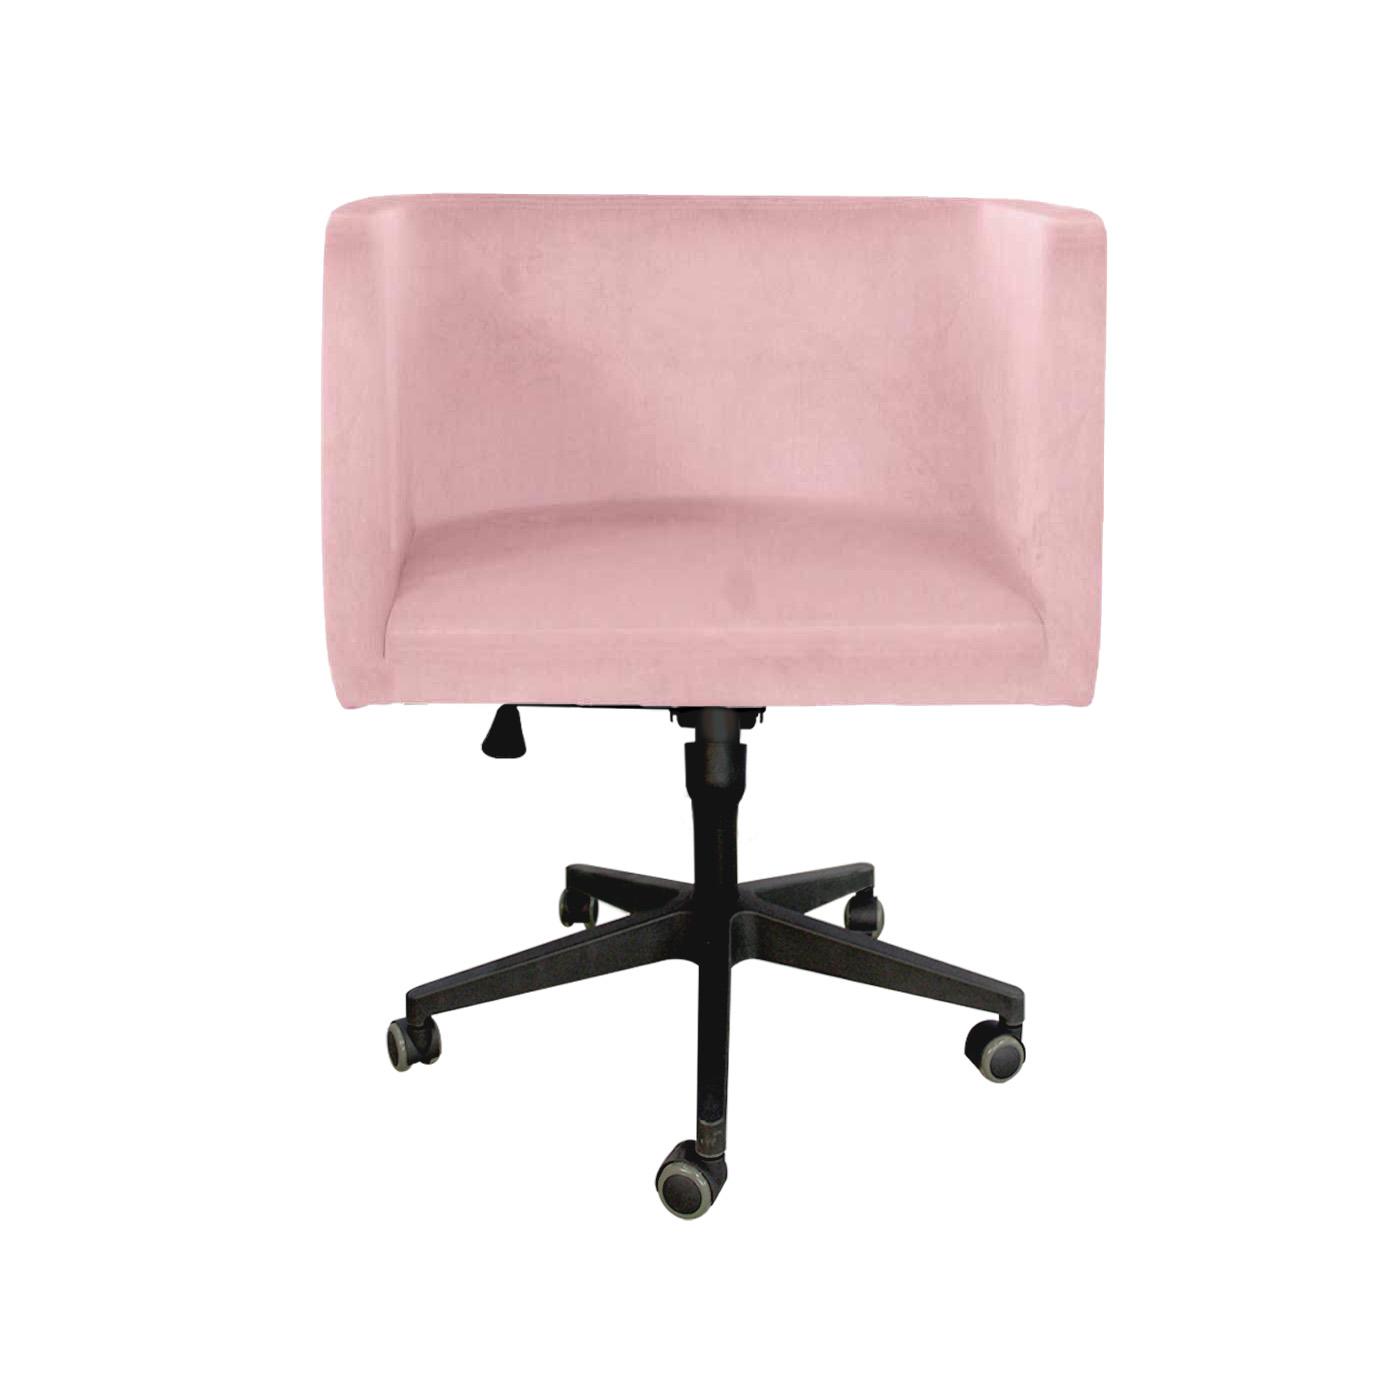 Dalian Pink Office Chair